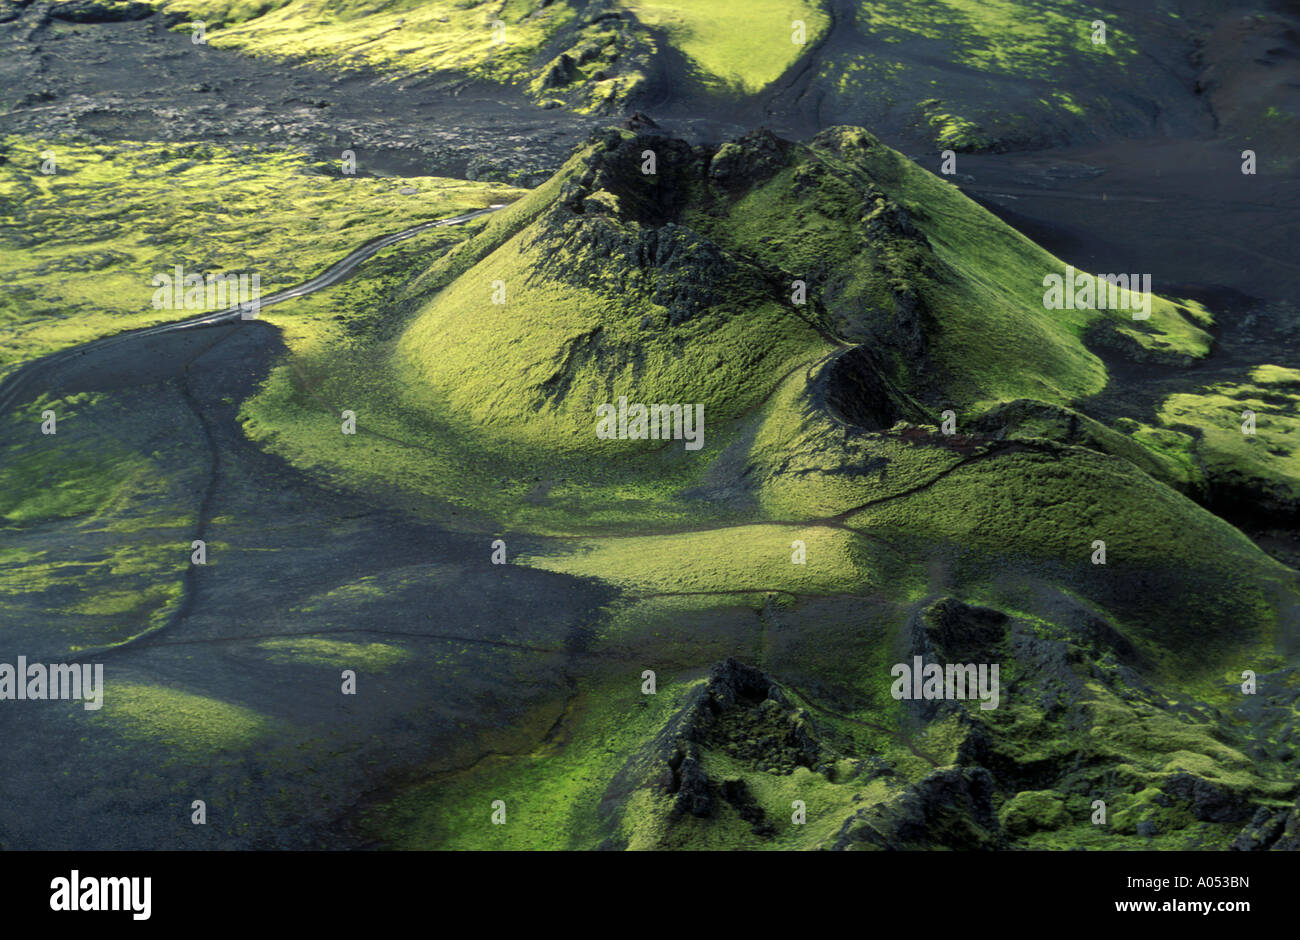 Laki vulkanische Kegel nach 1783 Eruption, Island. Stockfoto